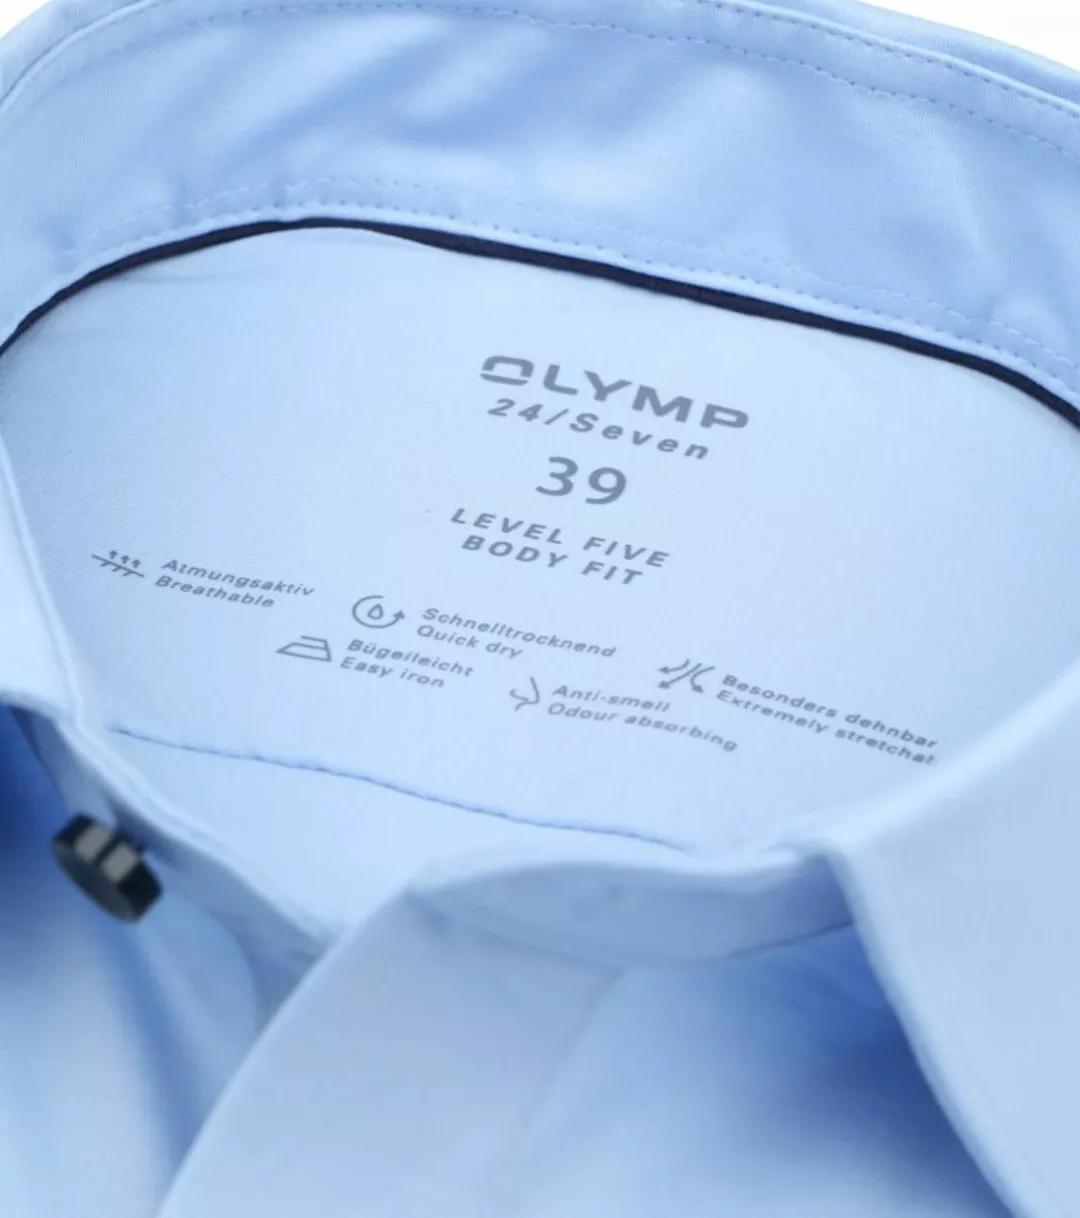 OLYMP Short Sleeve Hemd Level 5 24/Seven Helblau - Größe 42 günstig online kaufen